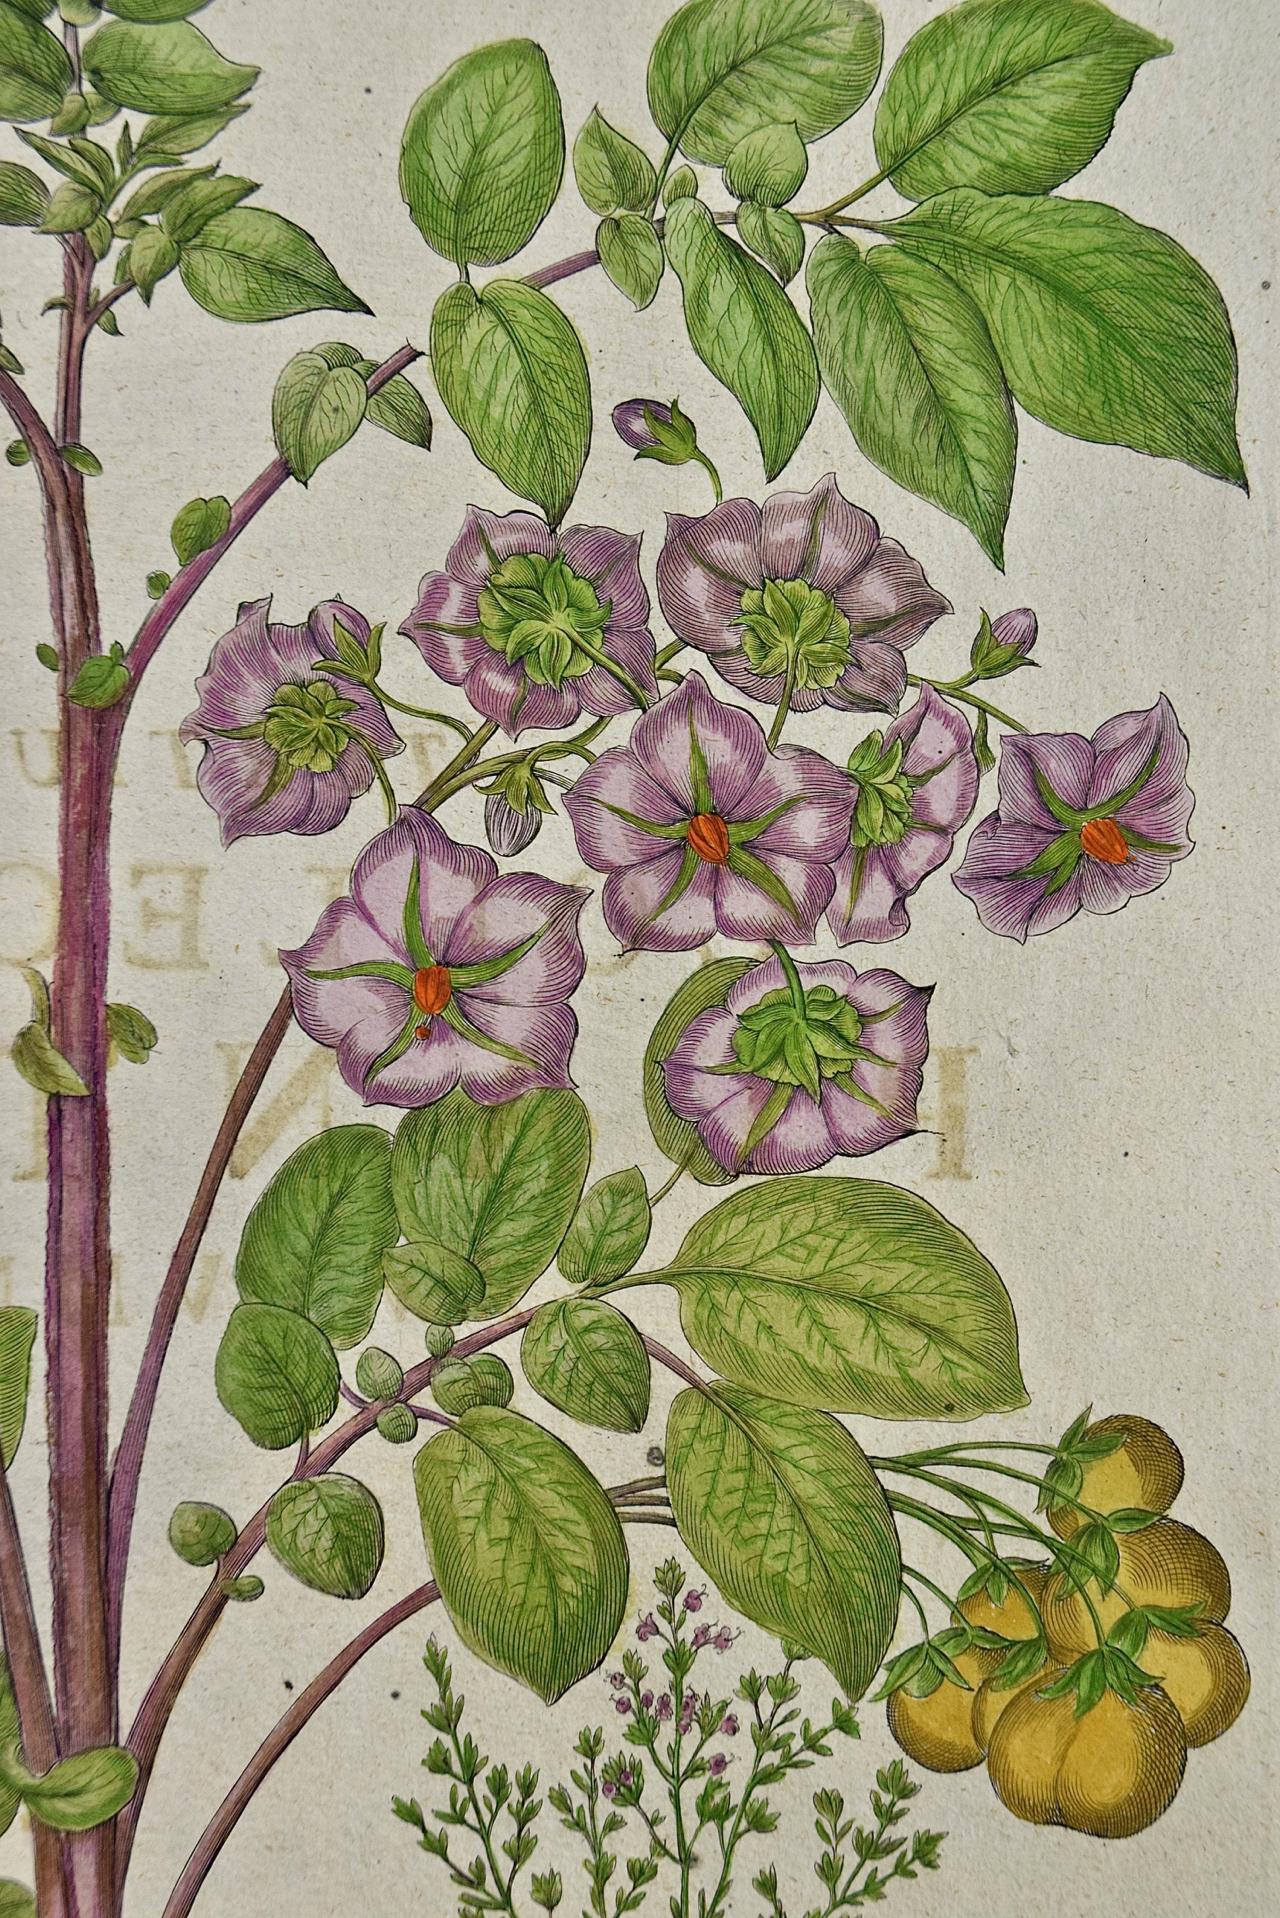 Besler Flowering Potato & Thyme: 18th Century Hand-colored Botanical Engraving - Print by Basilius Besler